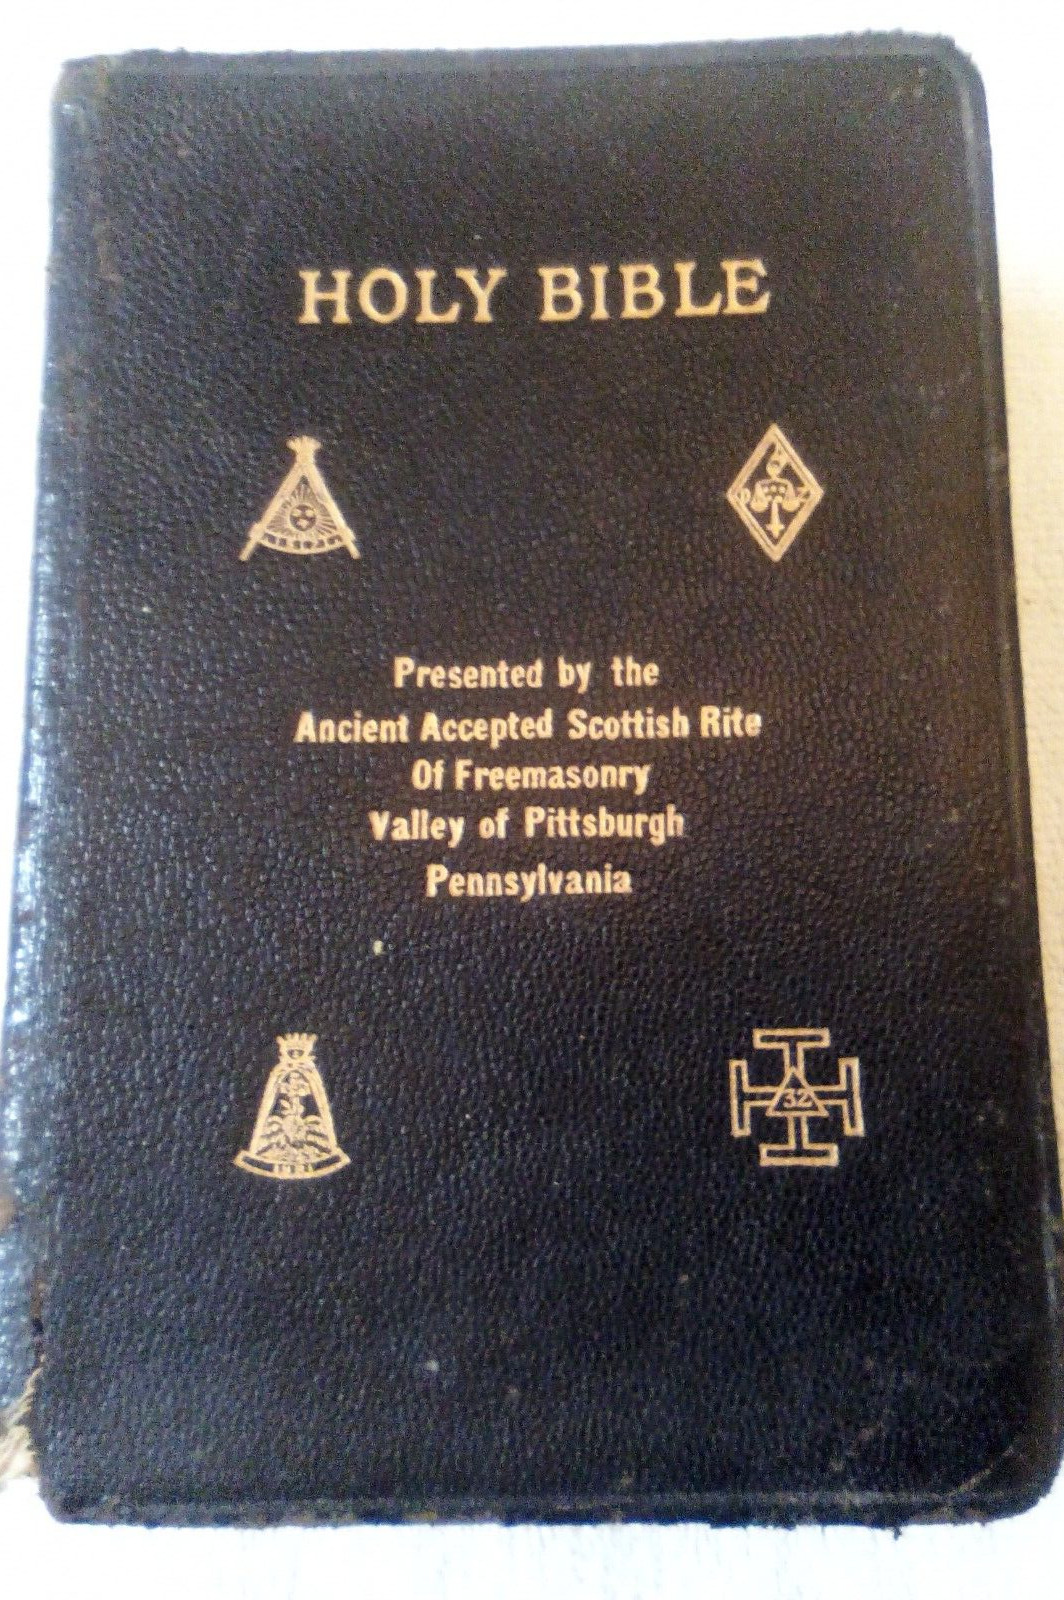 Vintage Freemason Masonic Edition Holy Bible (1957) Mesquite, Texas Lodge